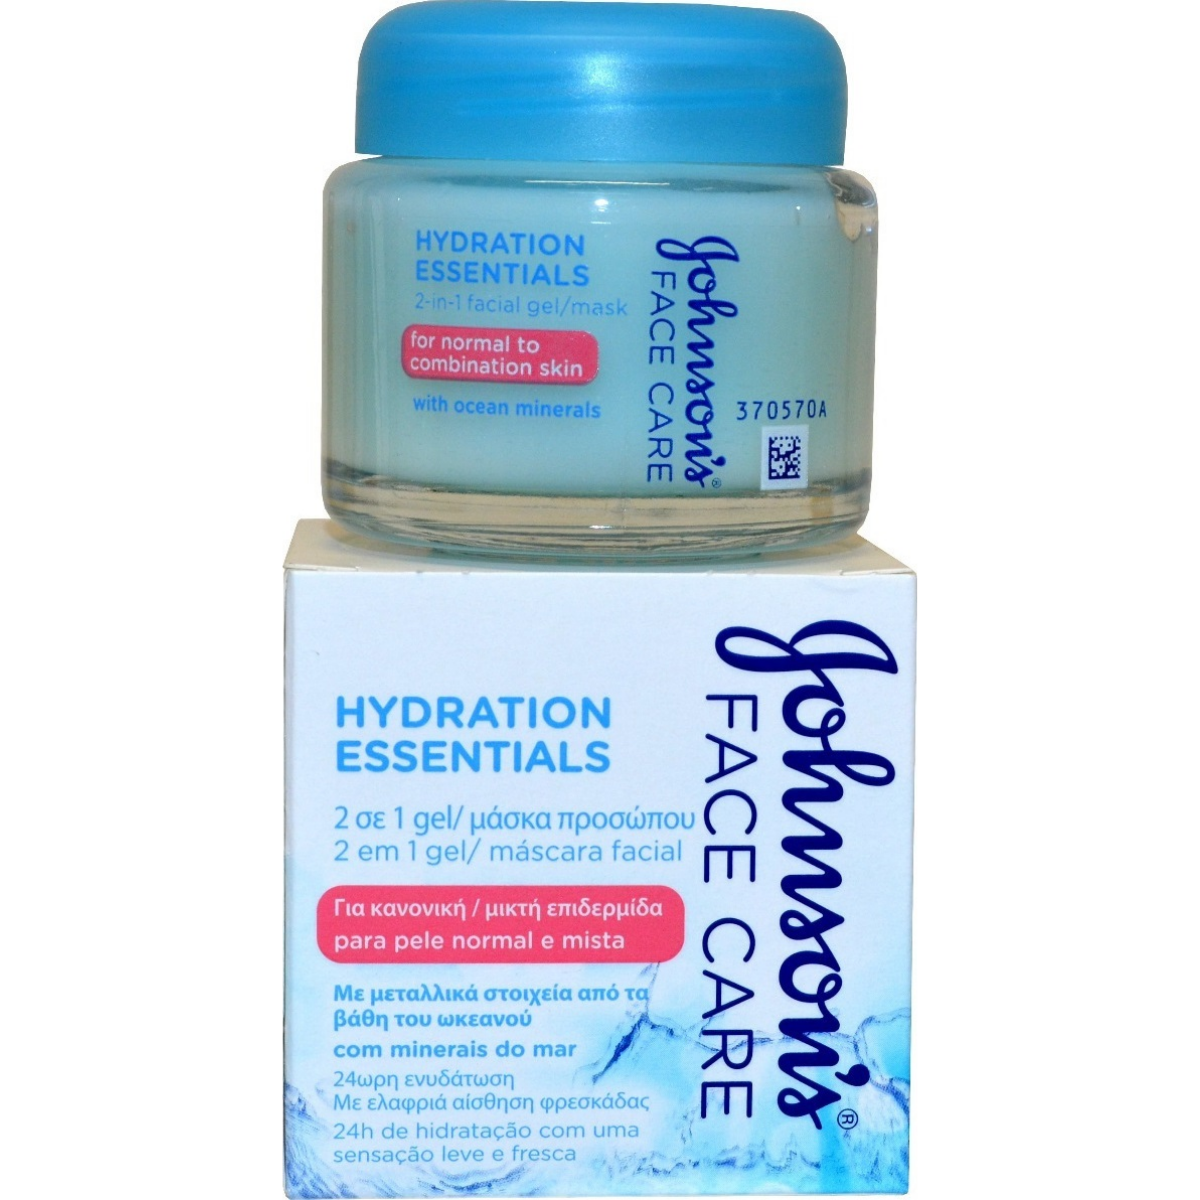 Johnson Johnson Hydration Essentials 2 in 1 Gel Mask with Ocean Minerals Normal Combination Skin 50ml.